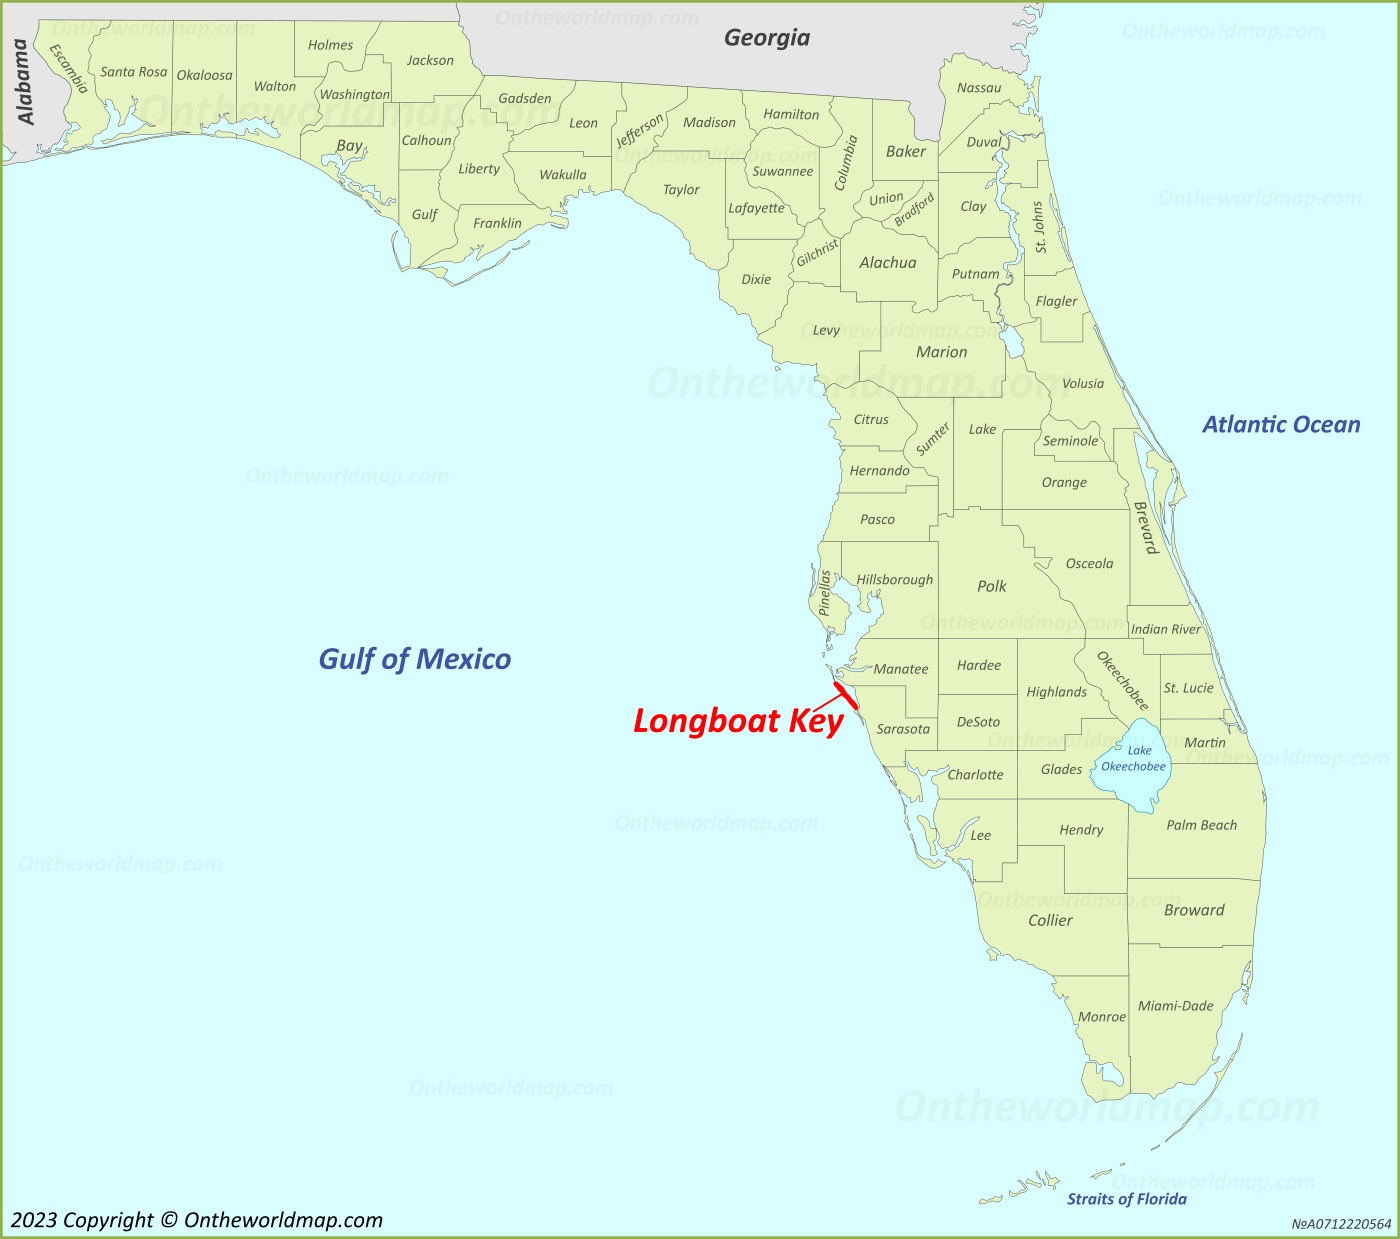 Longboat Key Location On The Florida Map